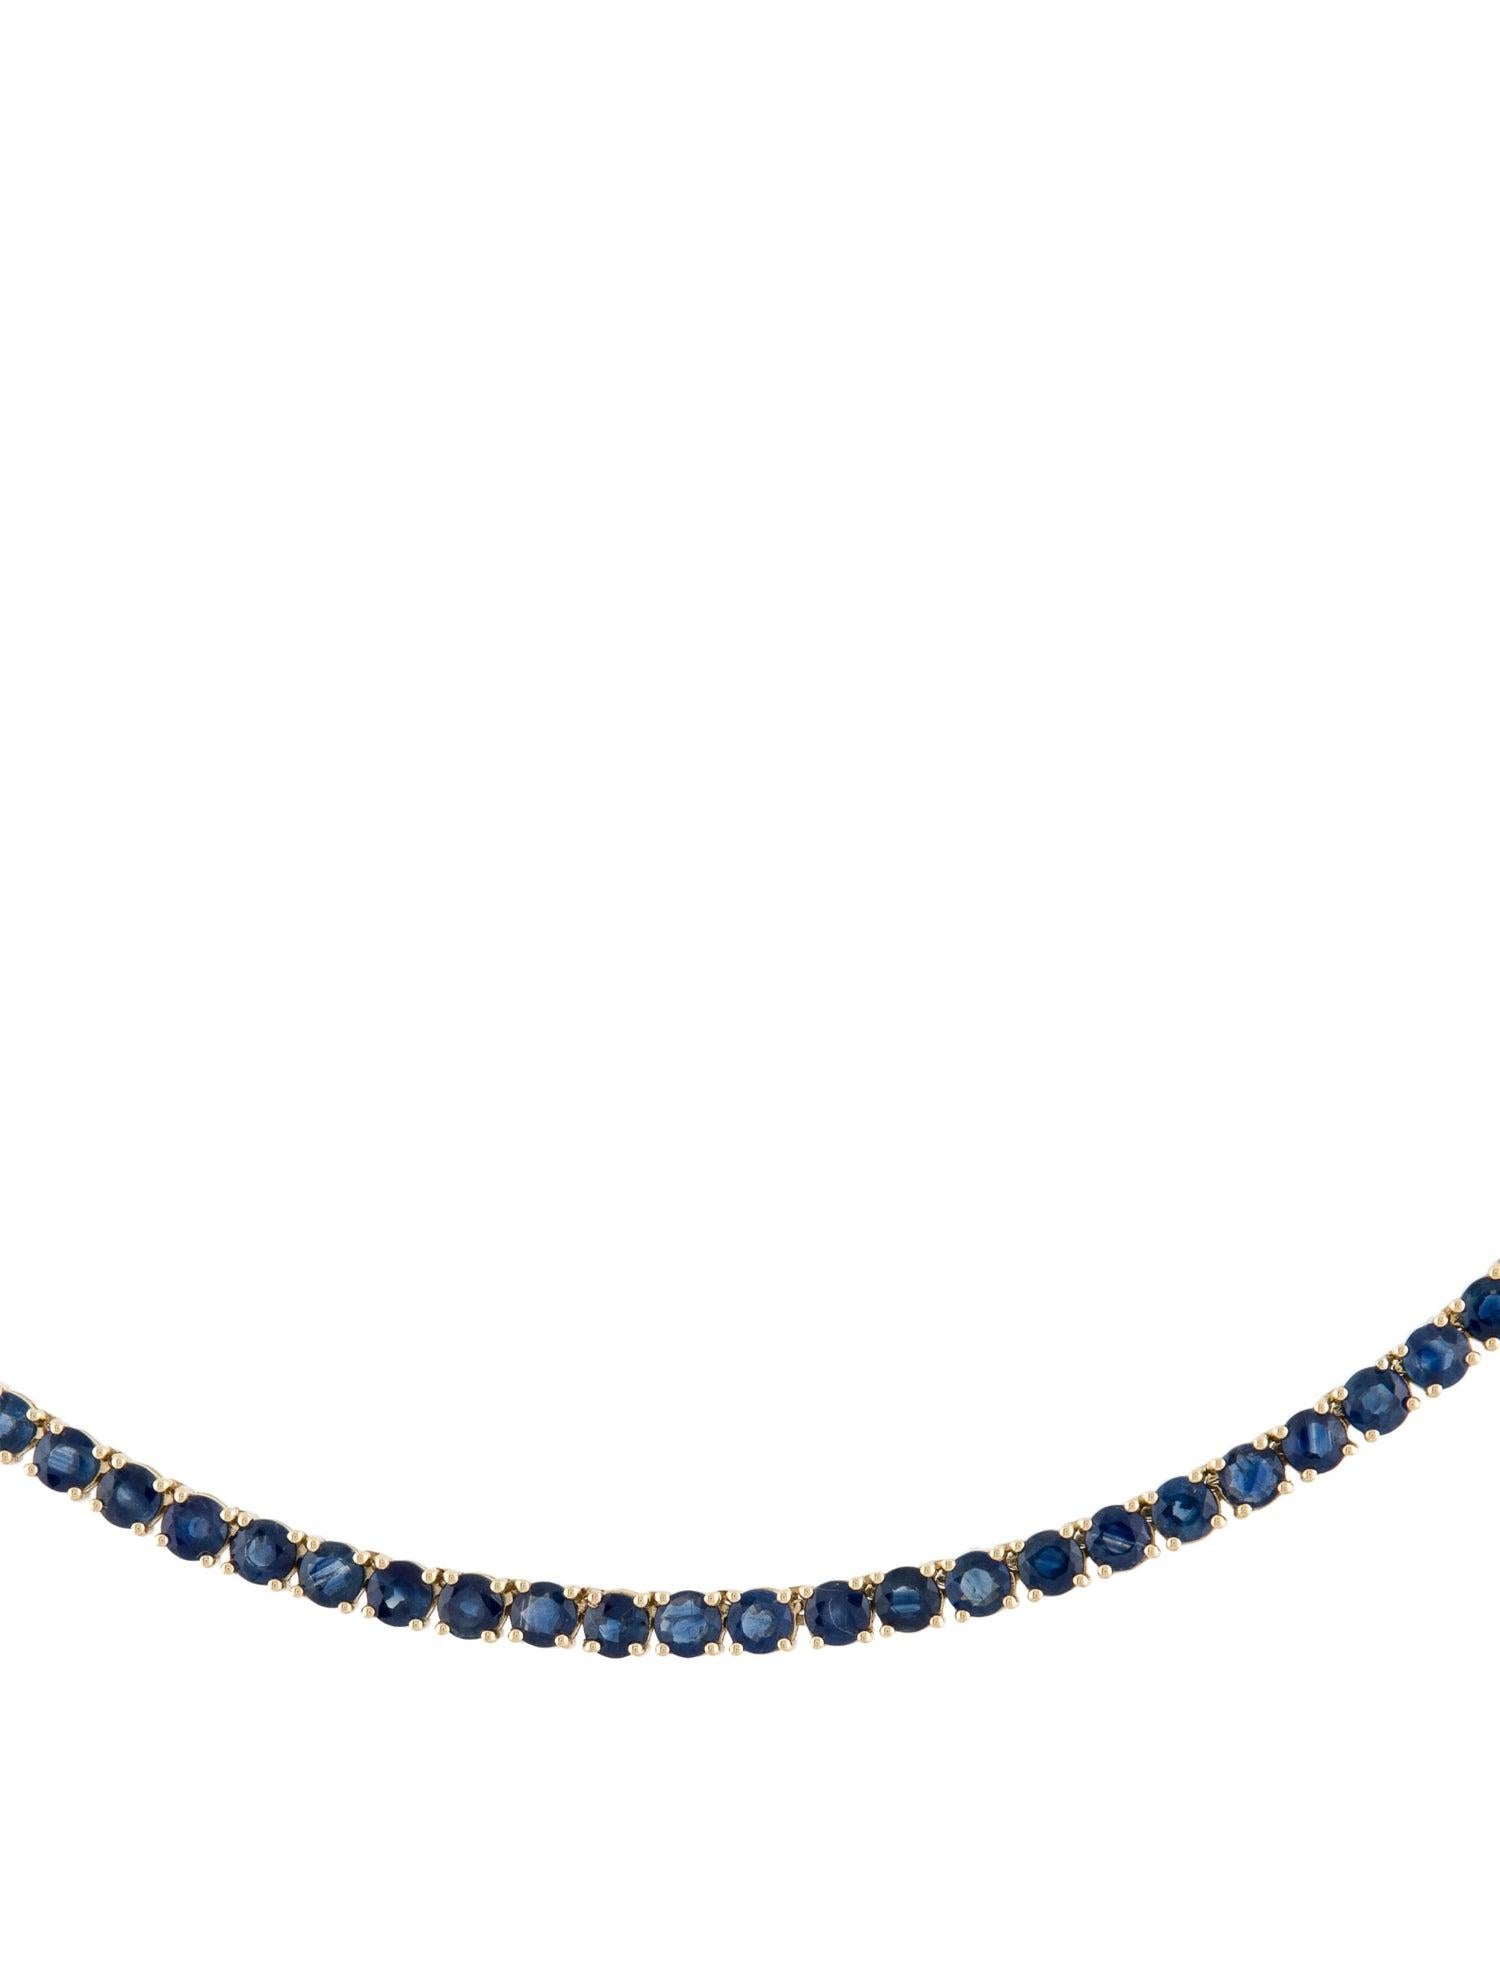 Brilliant Cut 14K 10.20ctw Sapphire Station Necklace - Exquisite Gemstone Statement Piece For Sale